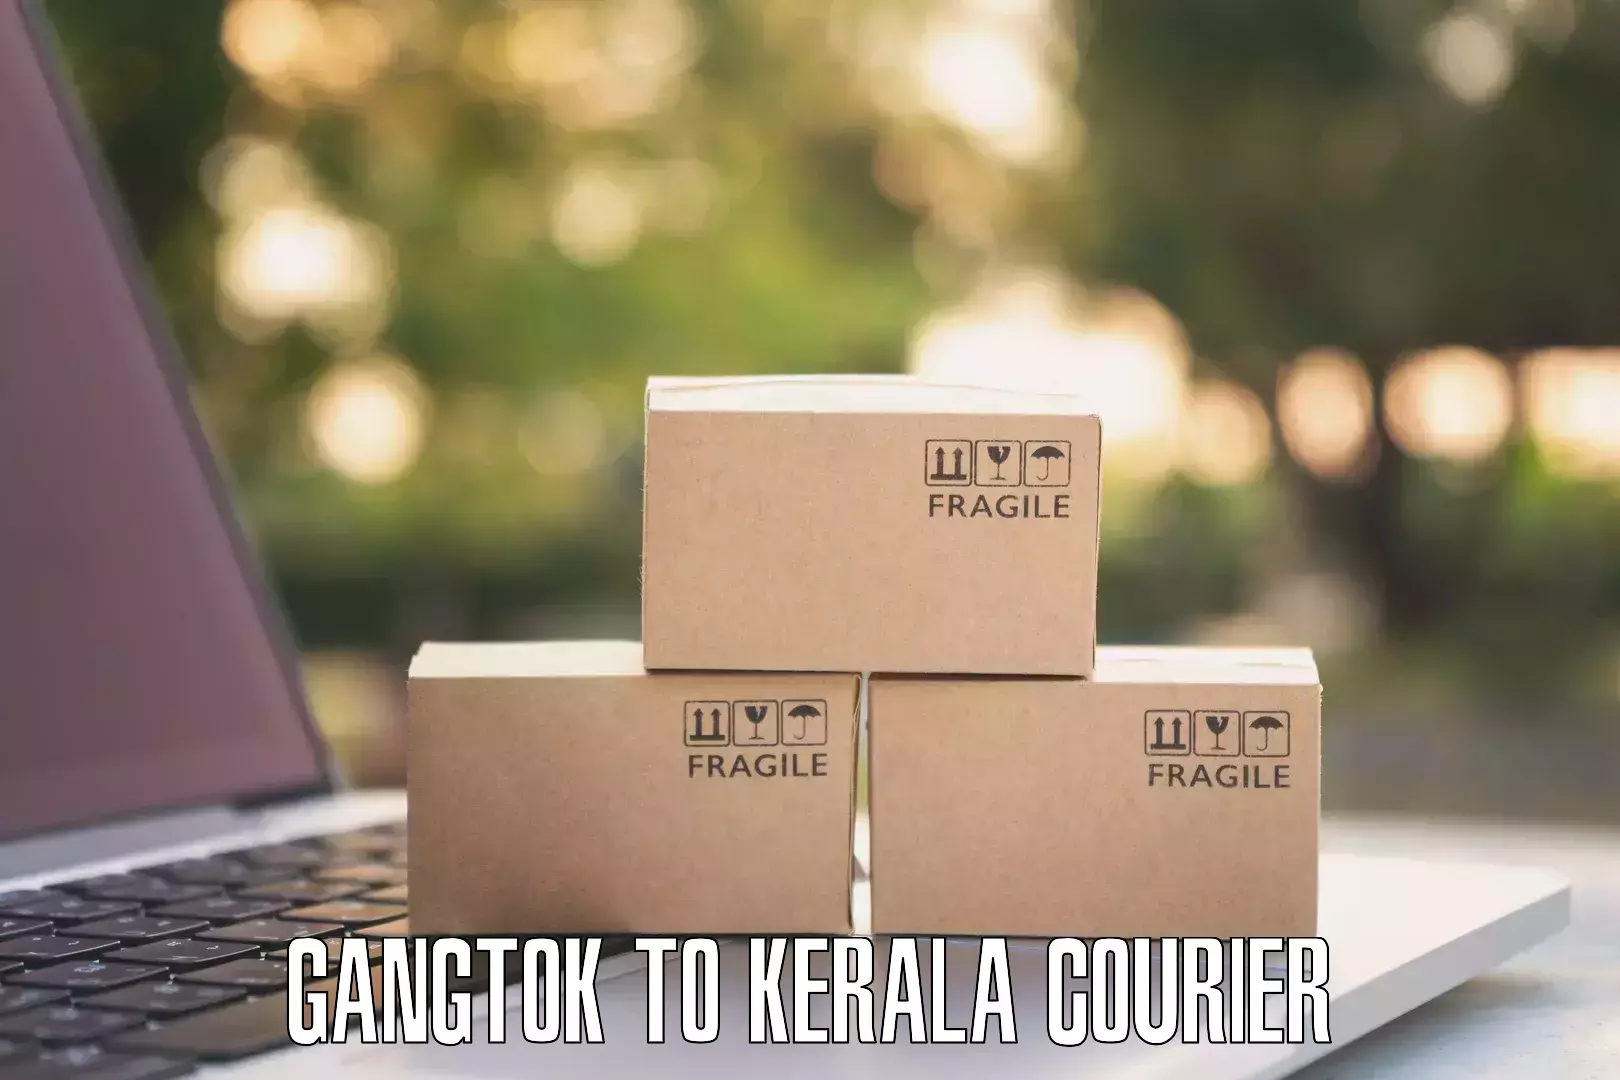 24-hour courier service Gangtok to Kottayam